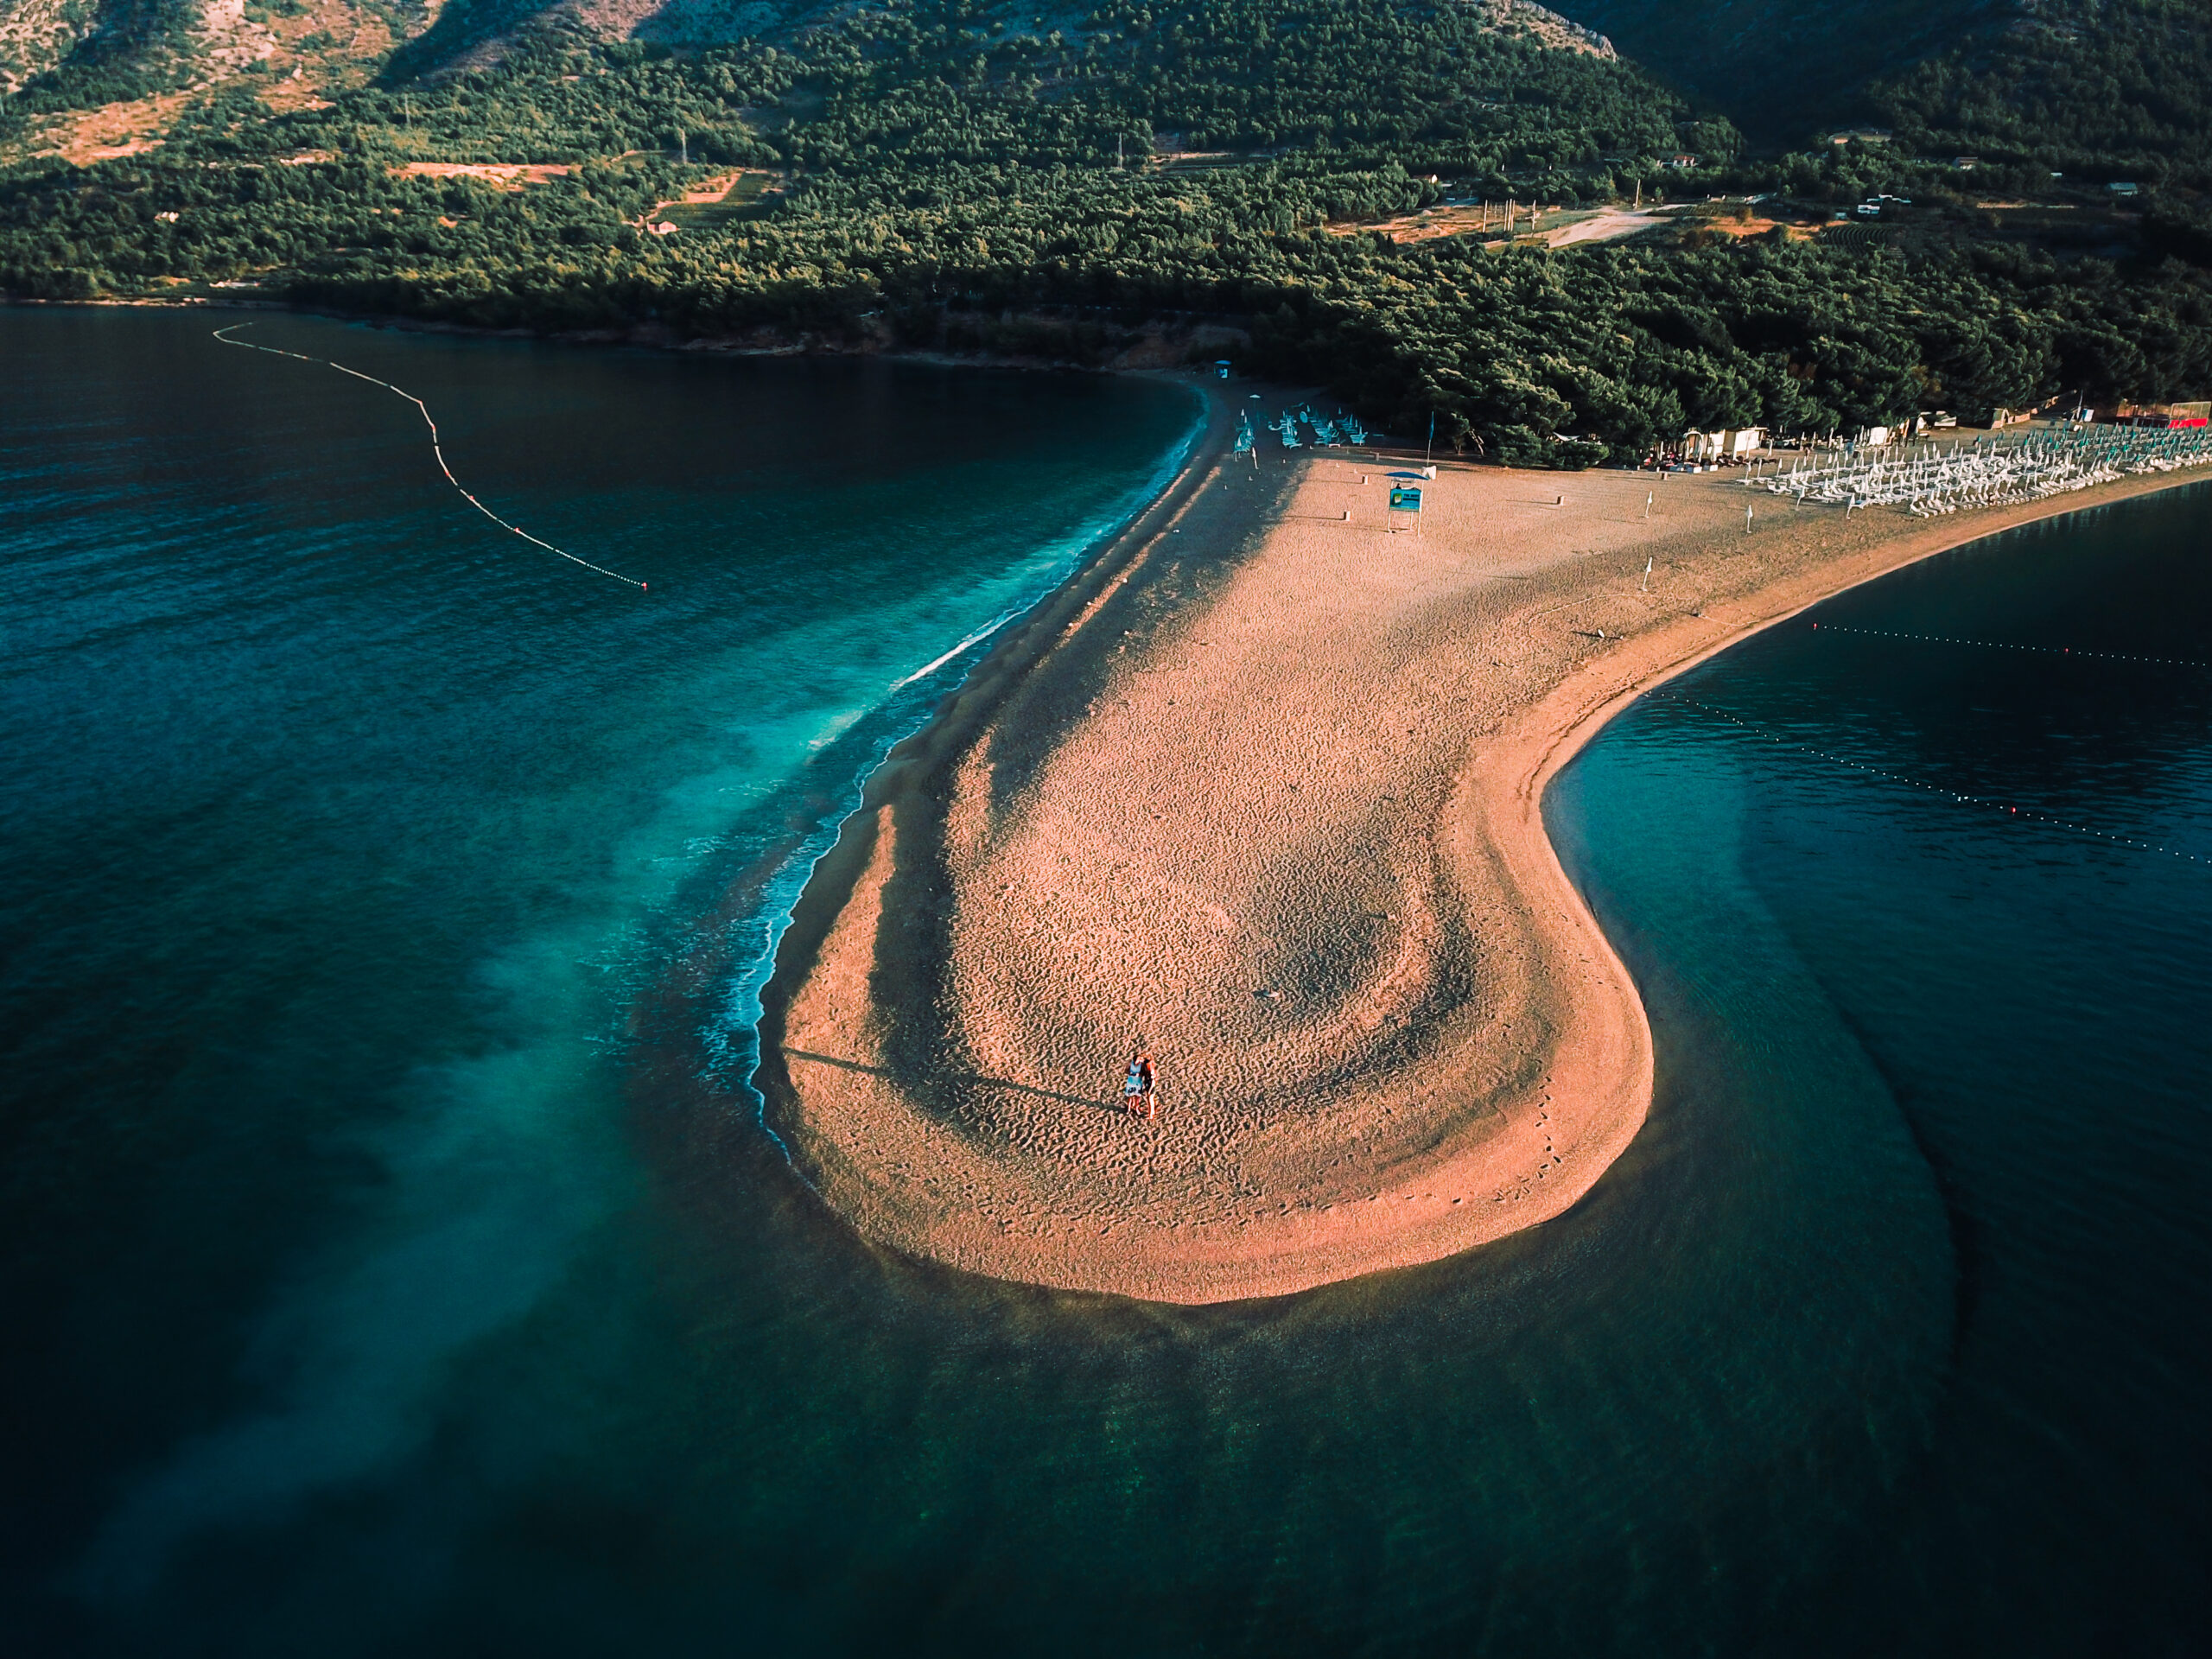 zlatni rat beach in croatia from above drone shot